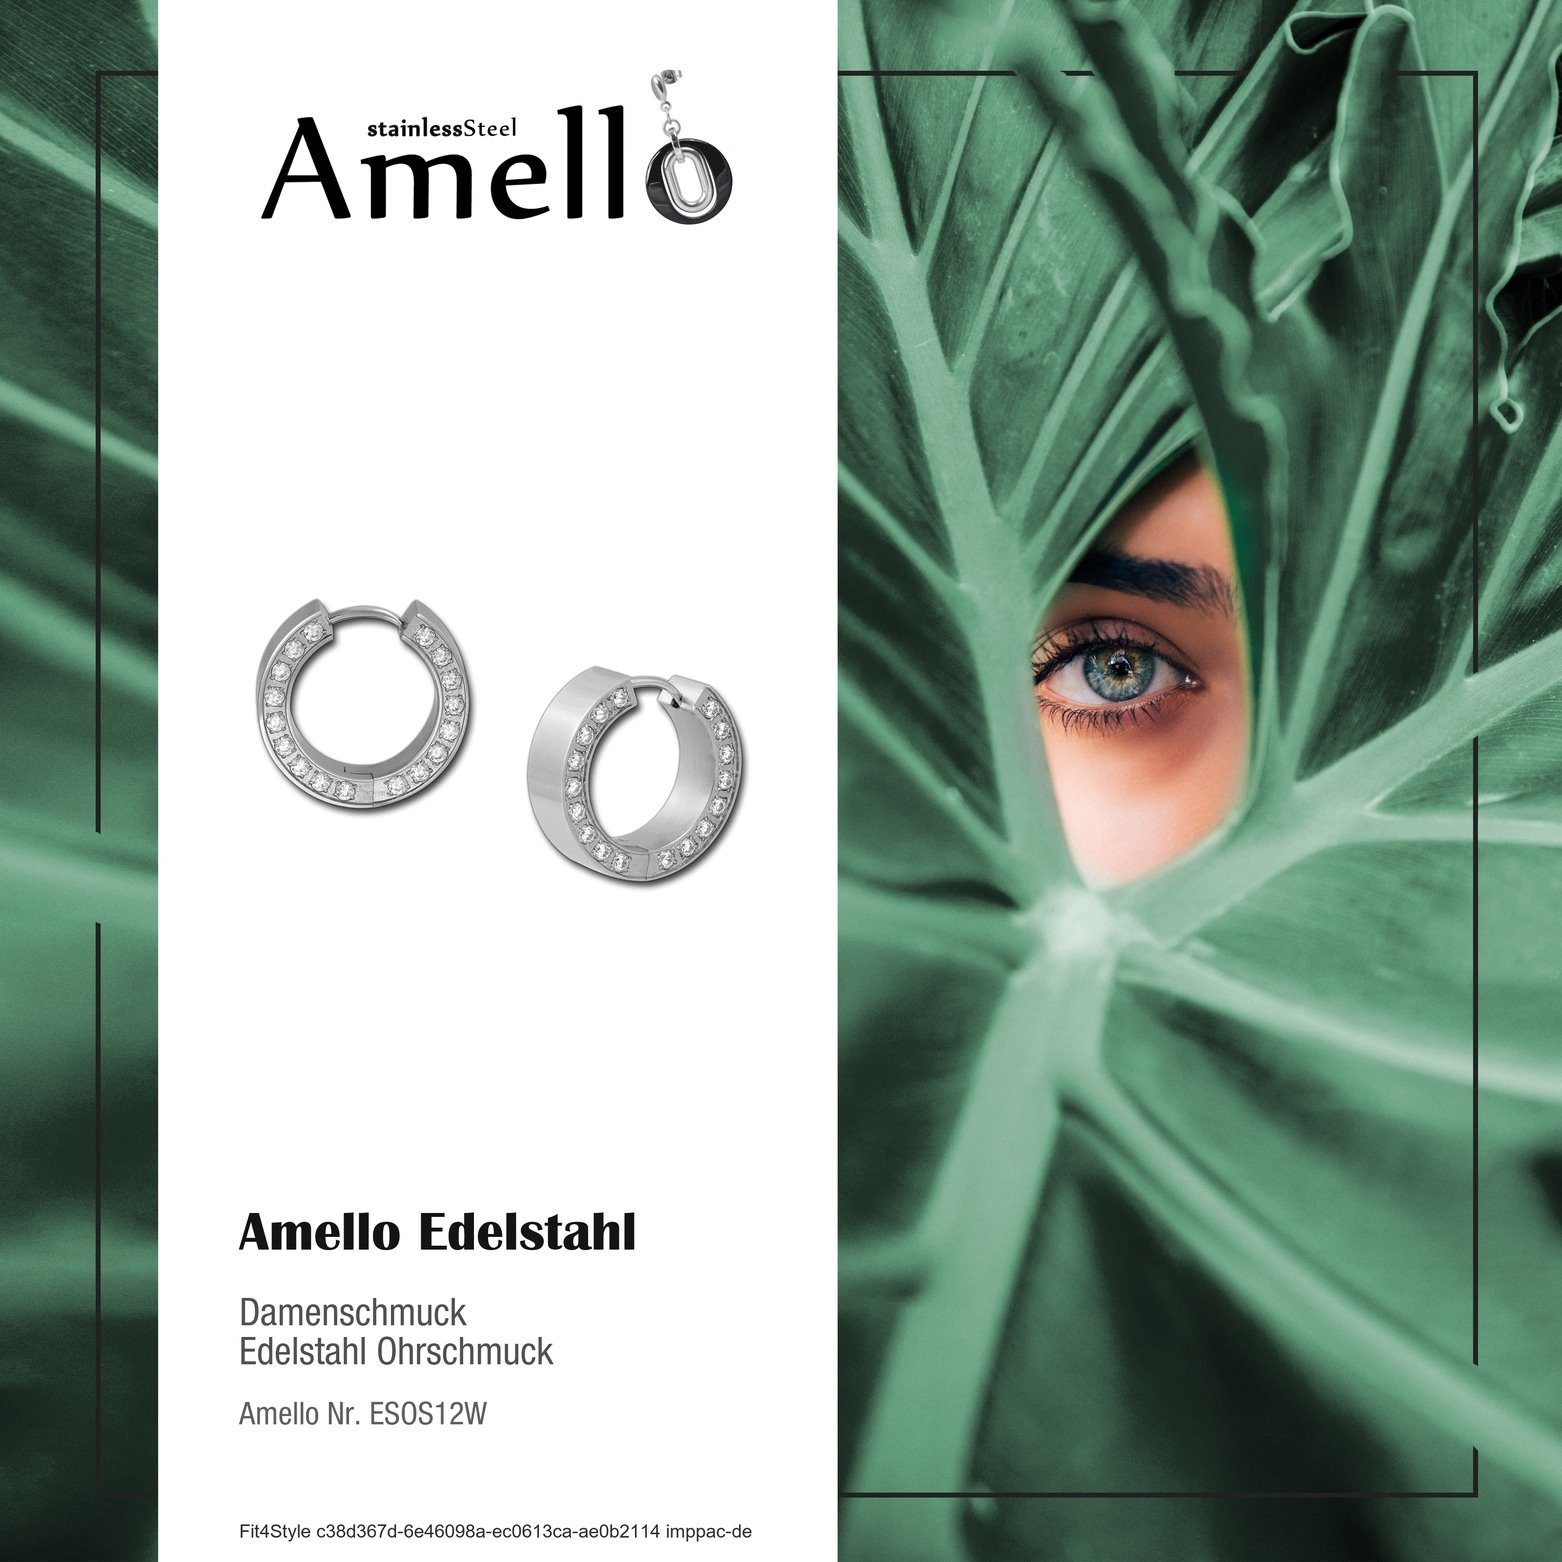 Amello Paar Creolen Amello Steel), Edelstahl Ohrringe Creolen weiß silberfarben, Creolen weiß (Creolen), Damen aus Edelstahl (Stainless